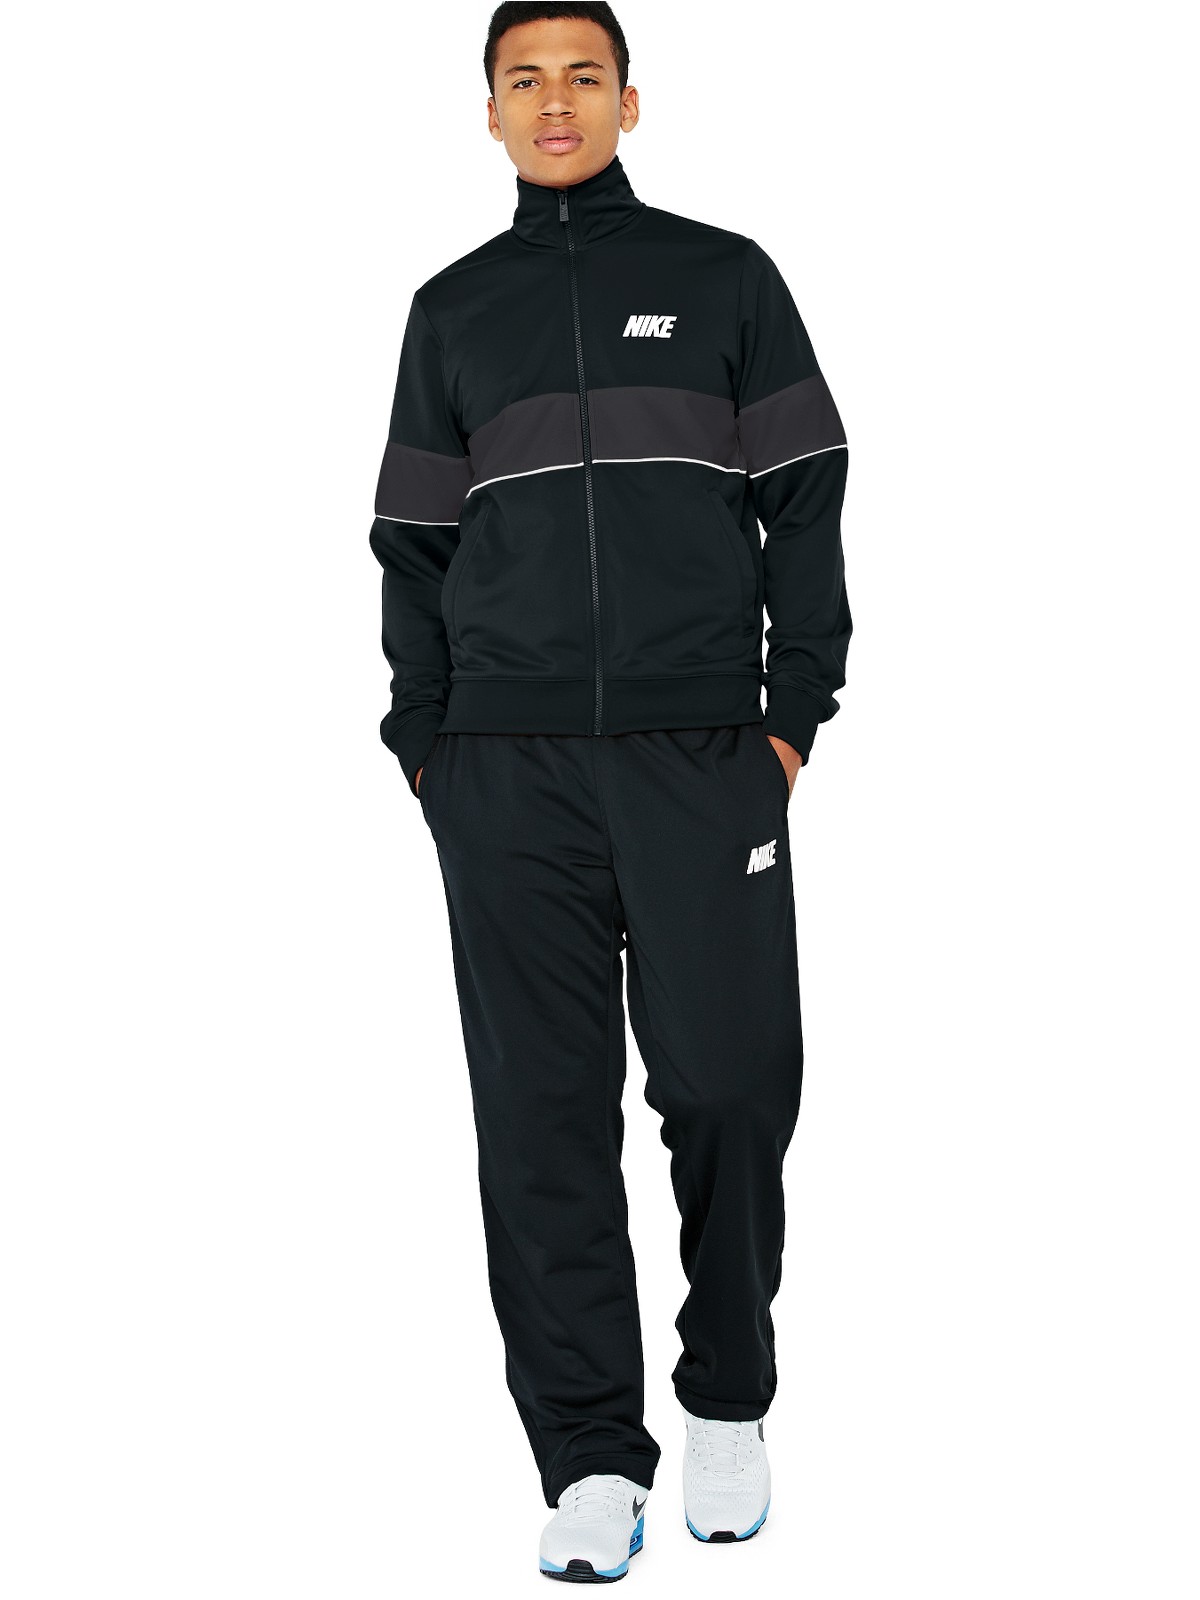 Nike Sweat Suits Mens Amazon - New Boy Set Nike Sweat Suit 2 Piece Set ...